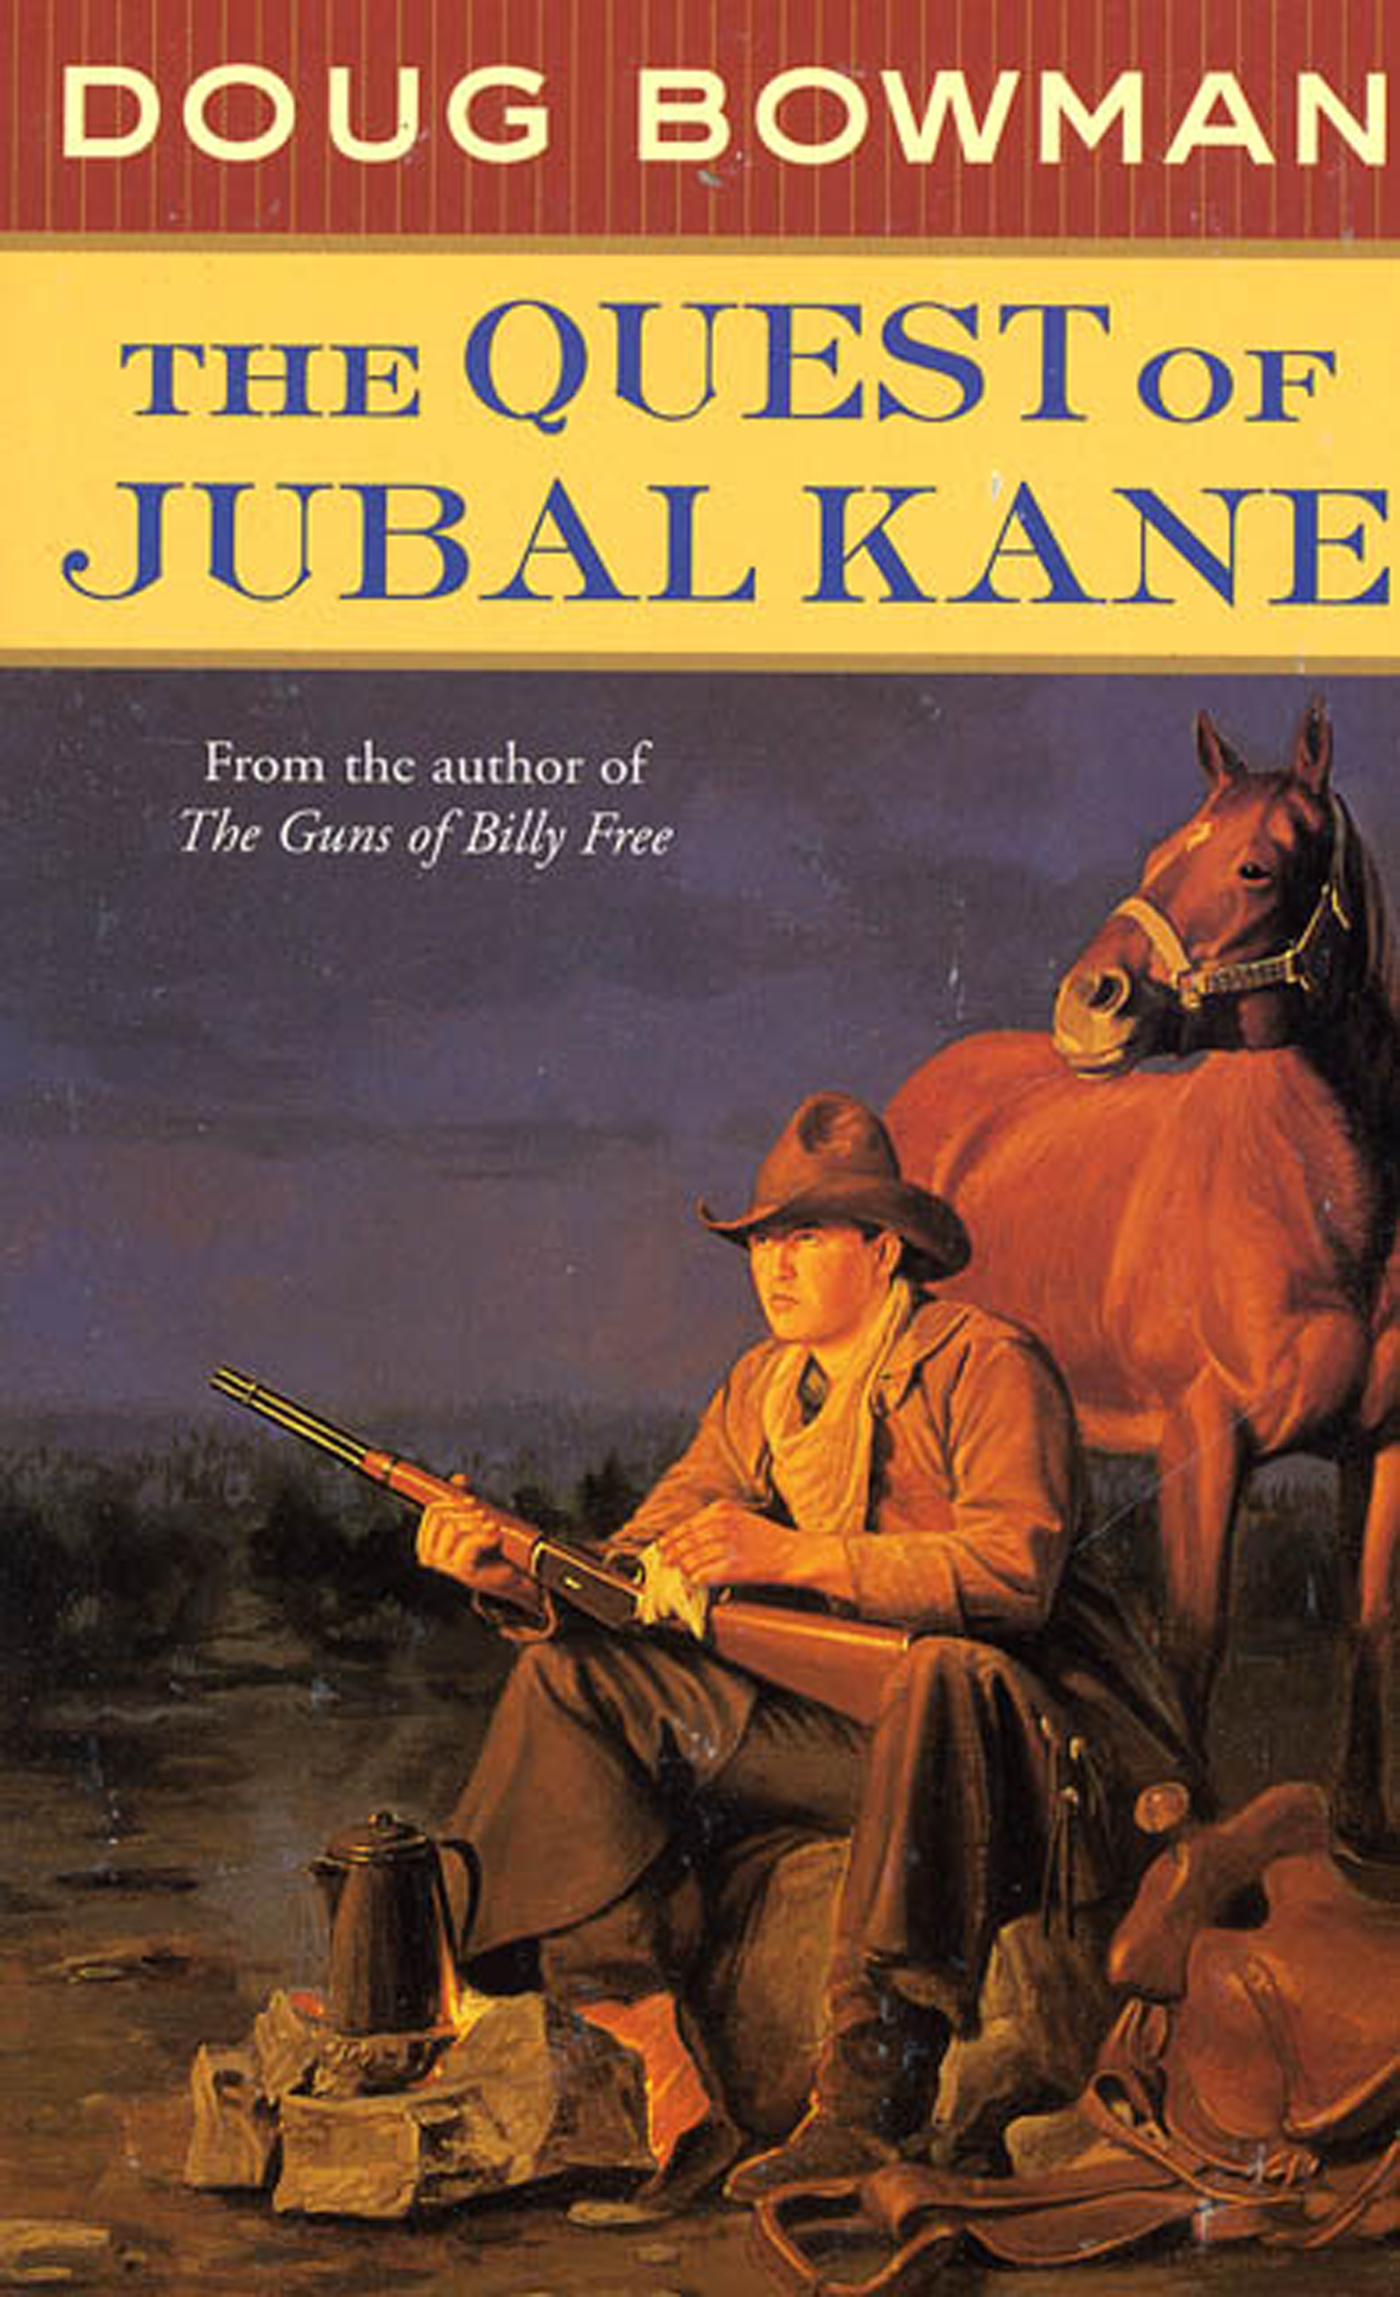 The Quest of Jubal Kane by Doug Bowman